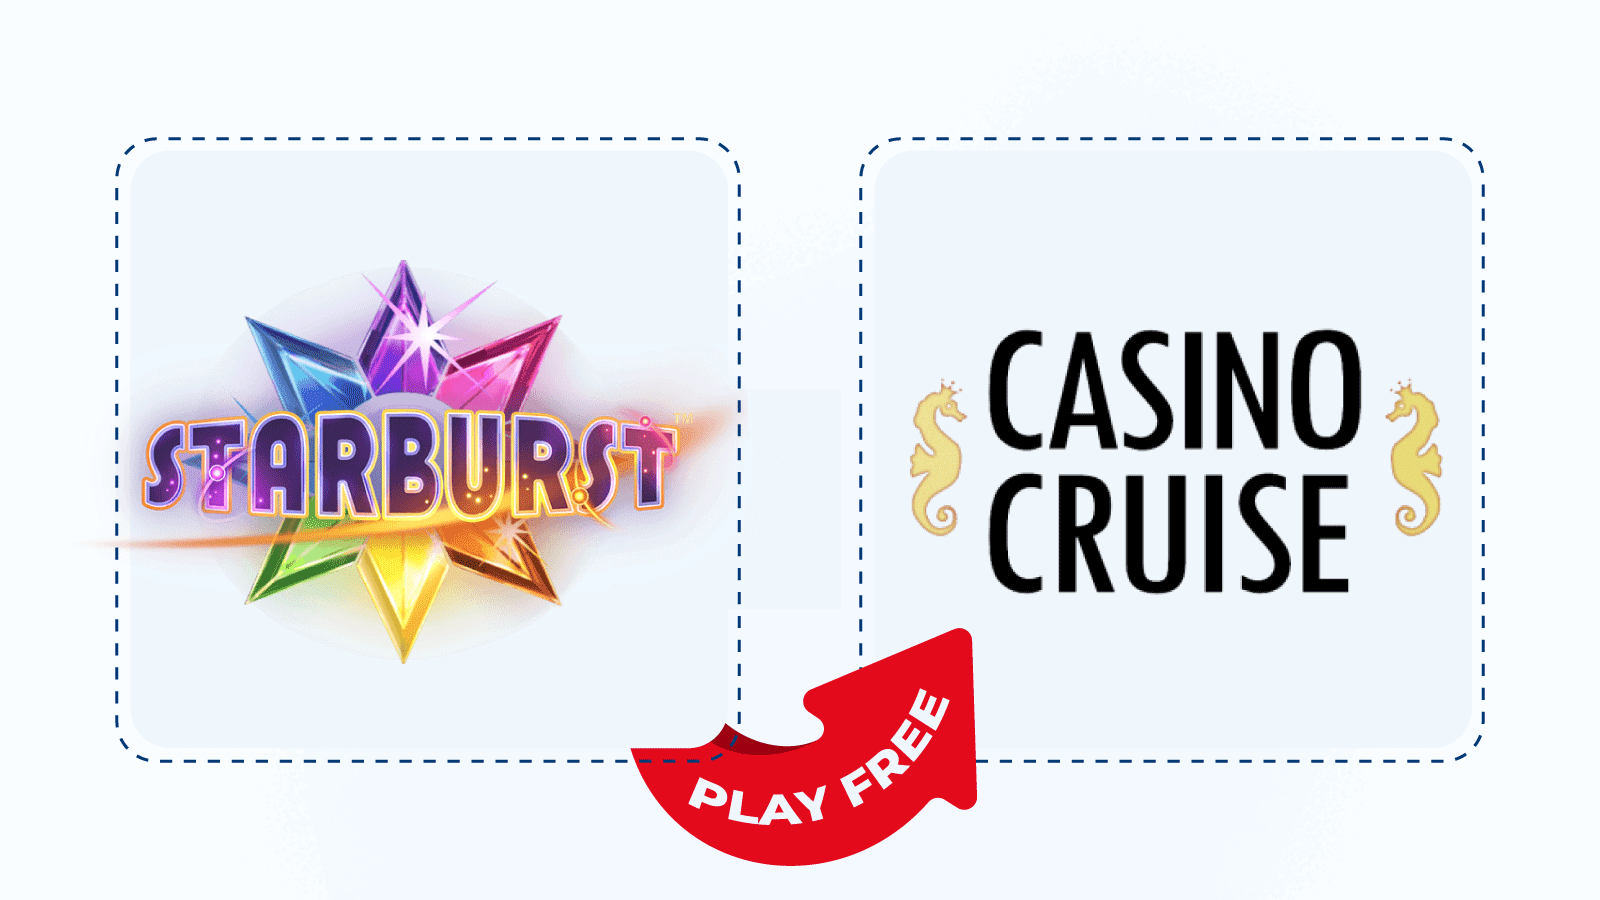 Play Starburst free at Casino Cruise